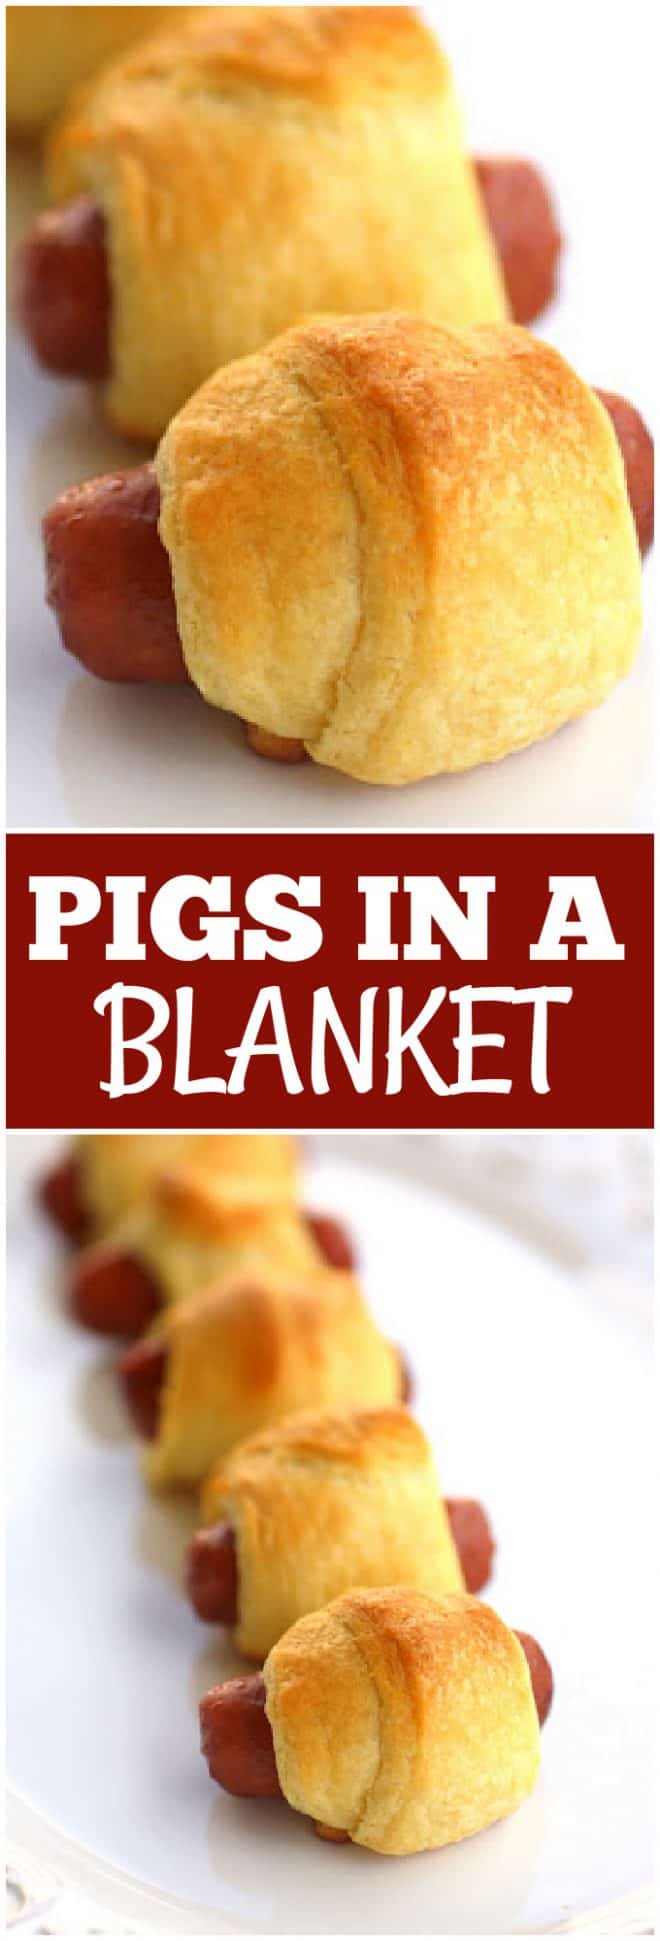 pigs in a blanket